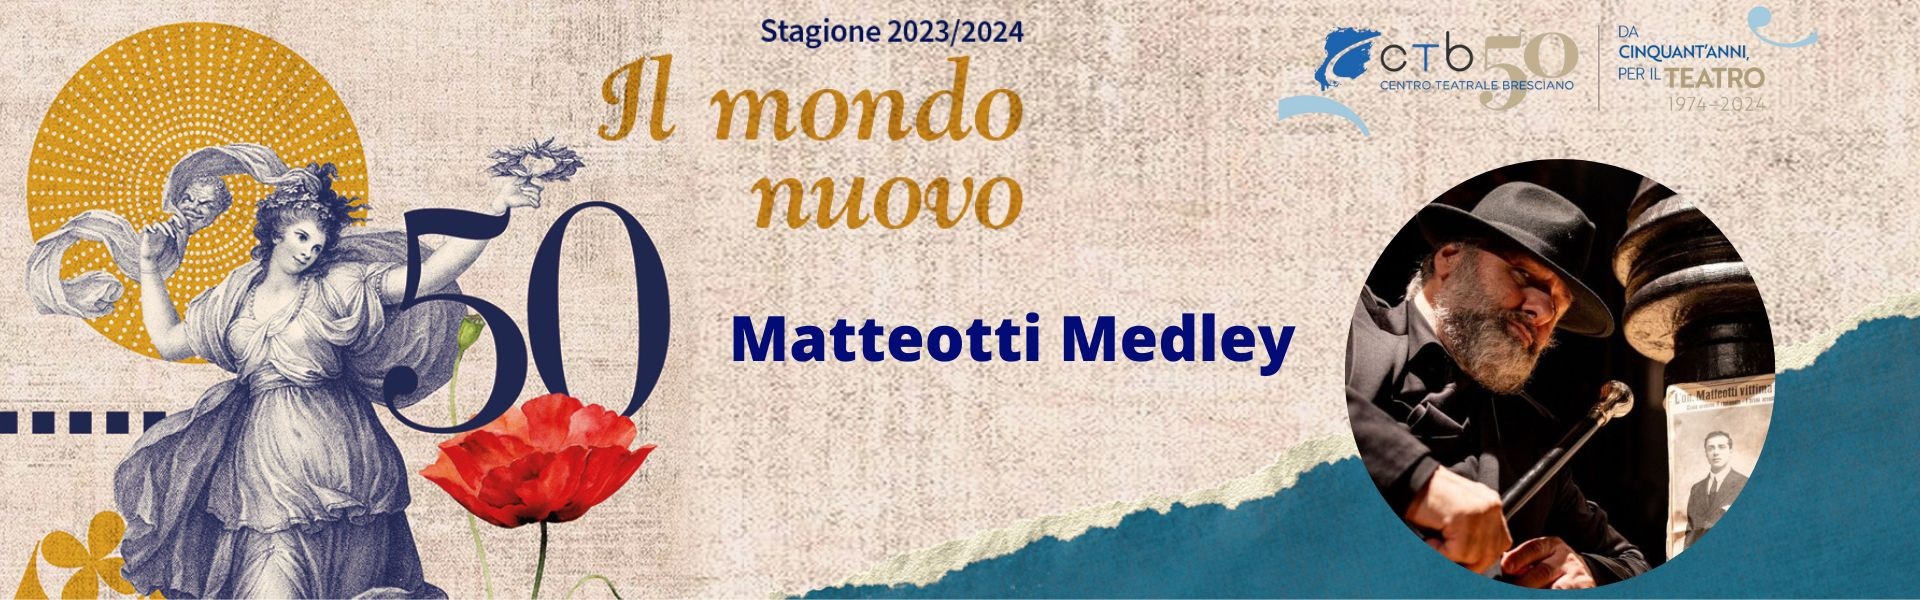 Stagione CTB - Matteotti Medley